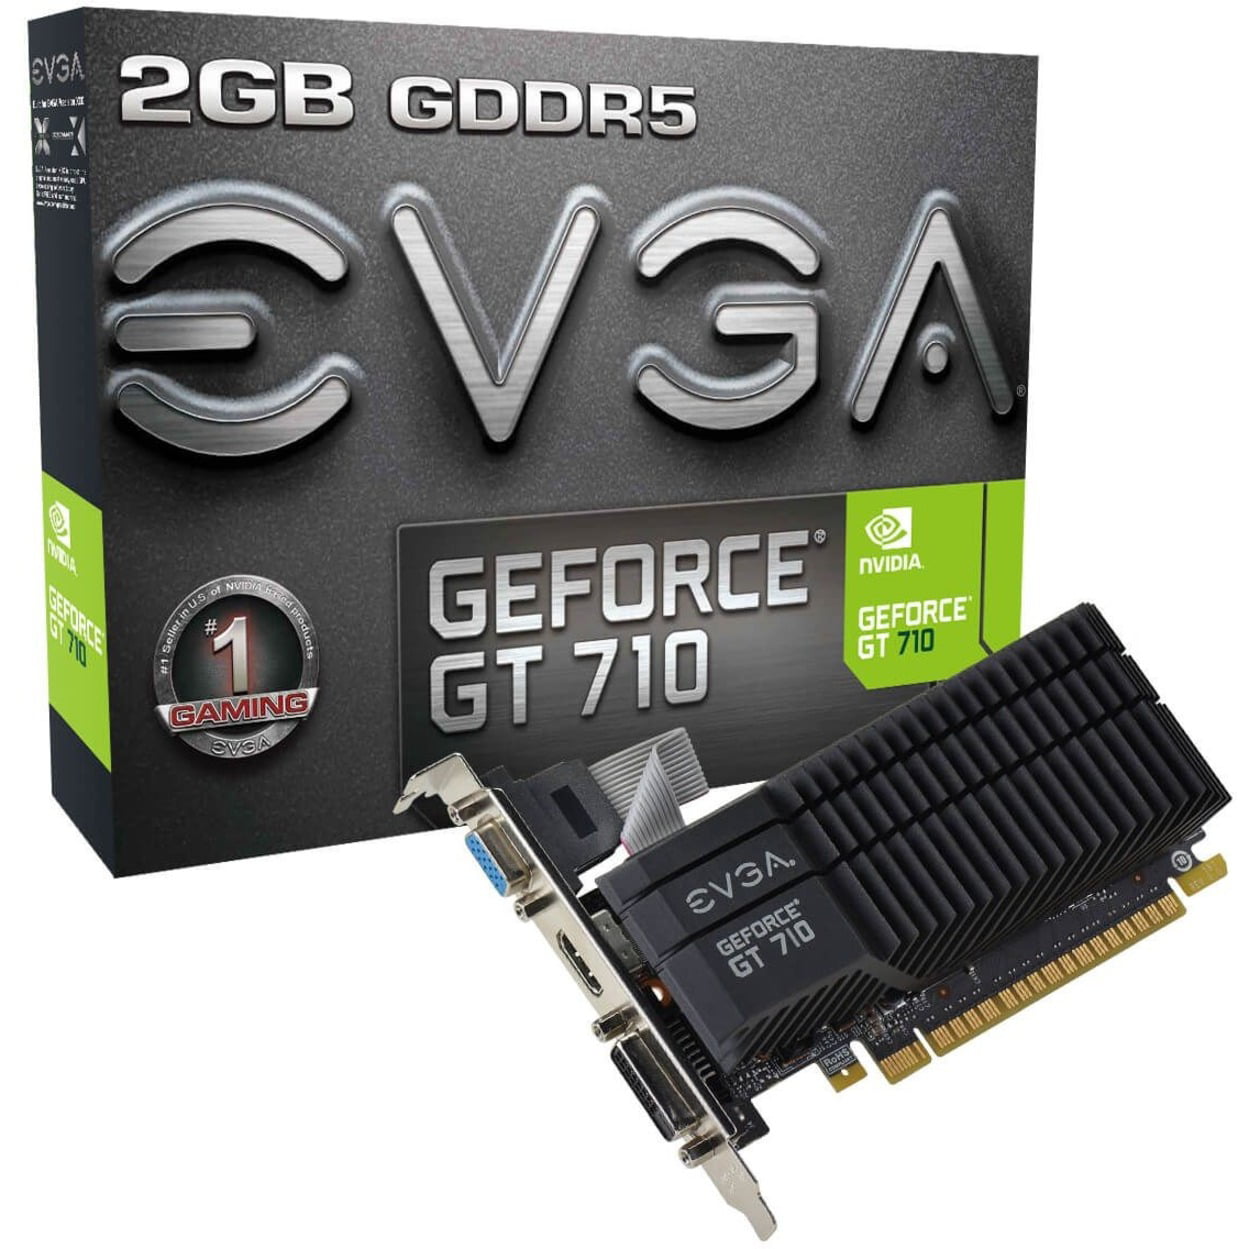 Gigabyte geforce gt 710 2gb. EVGA gt 710. Gt710 2gb Low profile. NVIDIA GEFORCE gt 710. Gt 710 1gb.